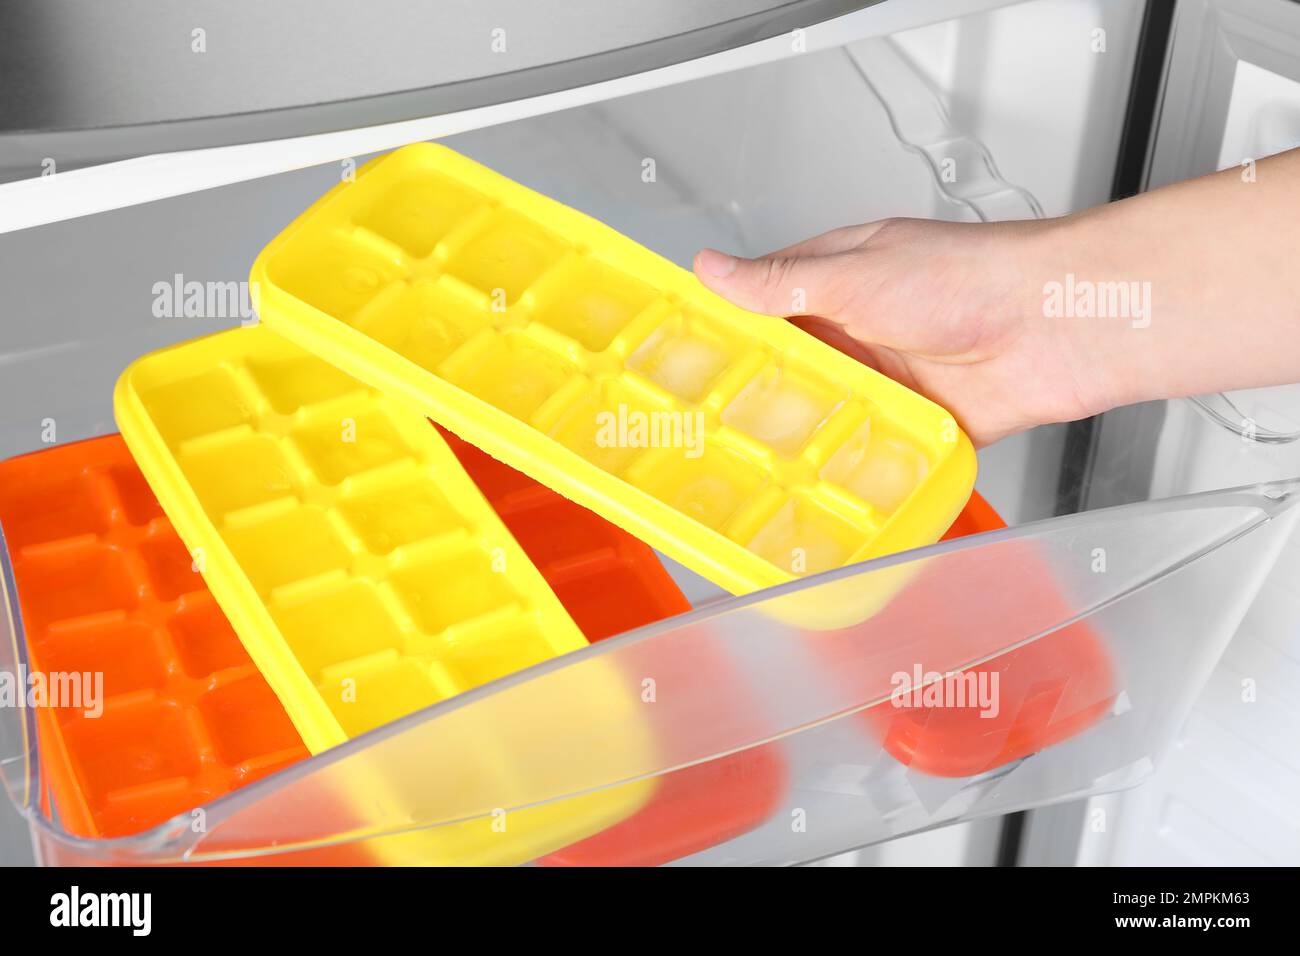 https://c8.alamy.com/comp/2MPKM63/woman-taking-tray-with-ice-cubes-from-fridge-closeup-2MPKM63.jpg